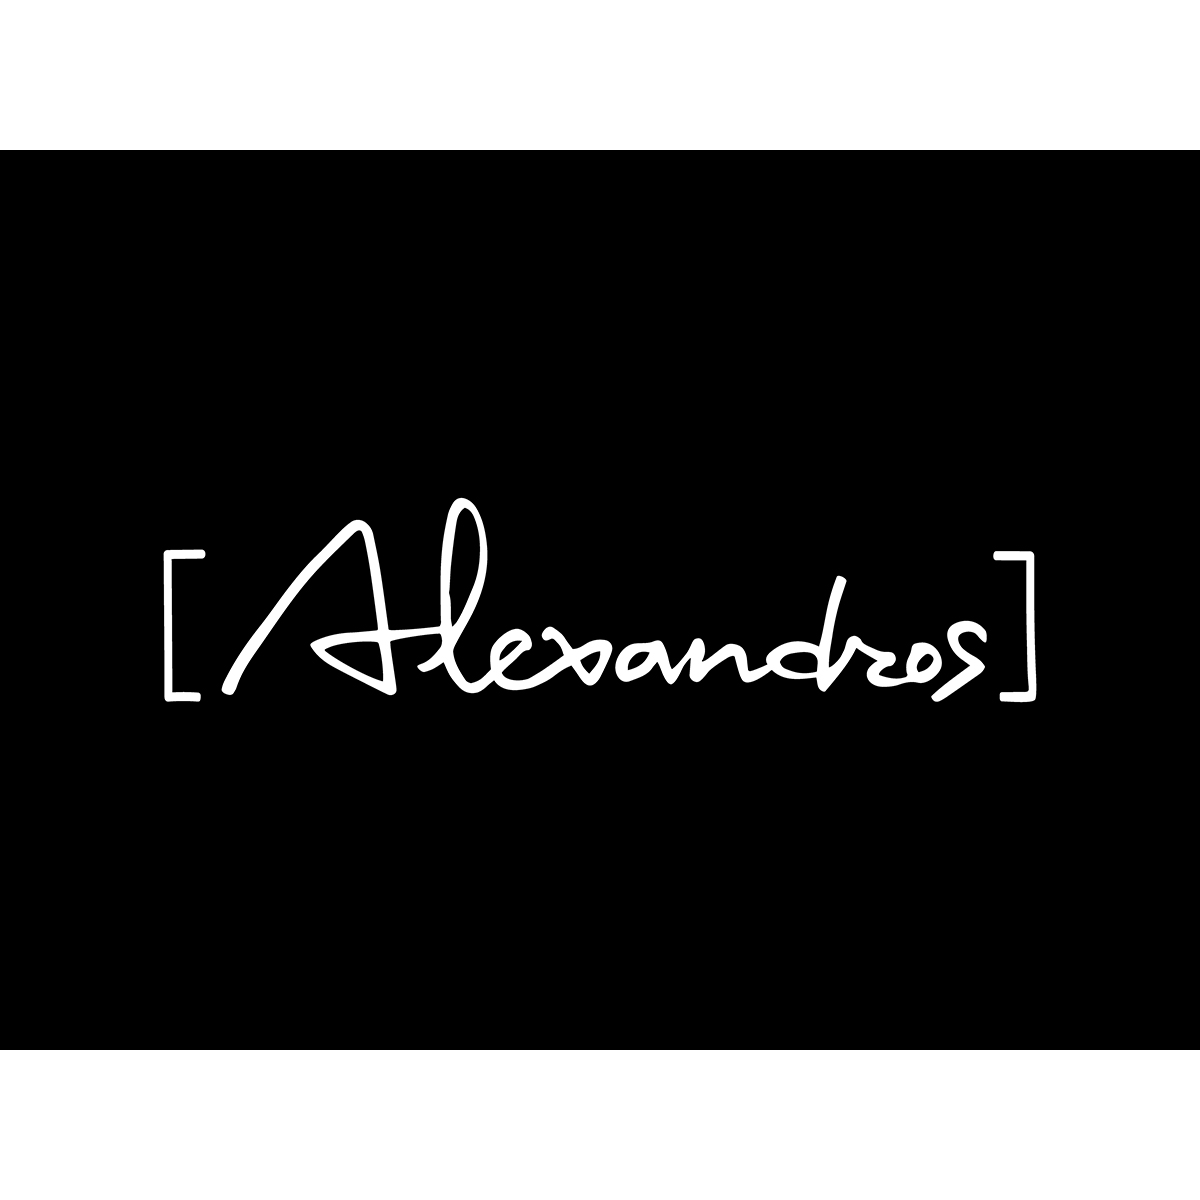 Alexandros 映画 機動戦士ガンダム 閃光のハサウェイ 主題歌タイトル 発売日決定 完全限定生産盤はオリジナル ガンプラを附属 21年3月21日 エキサイトニュース 3 4